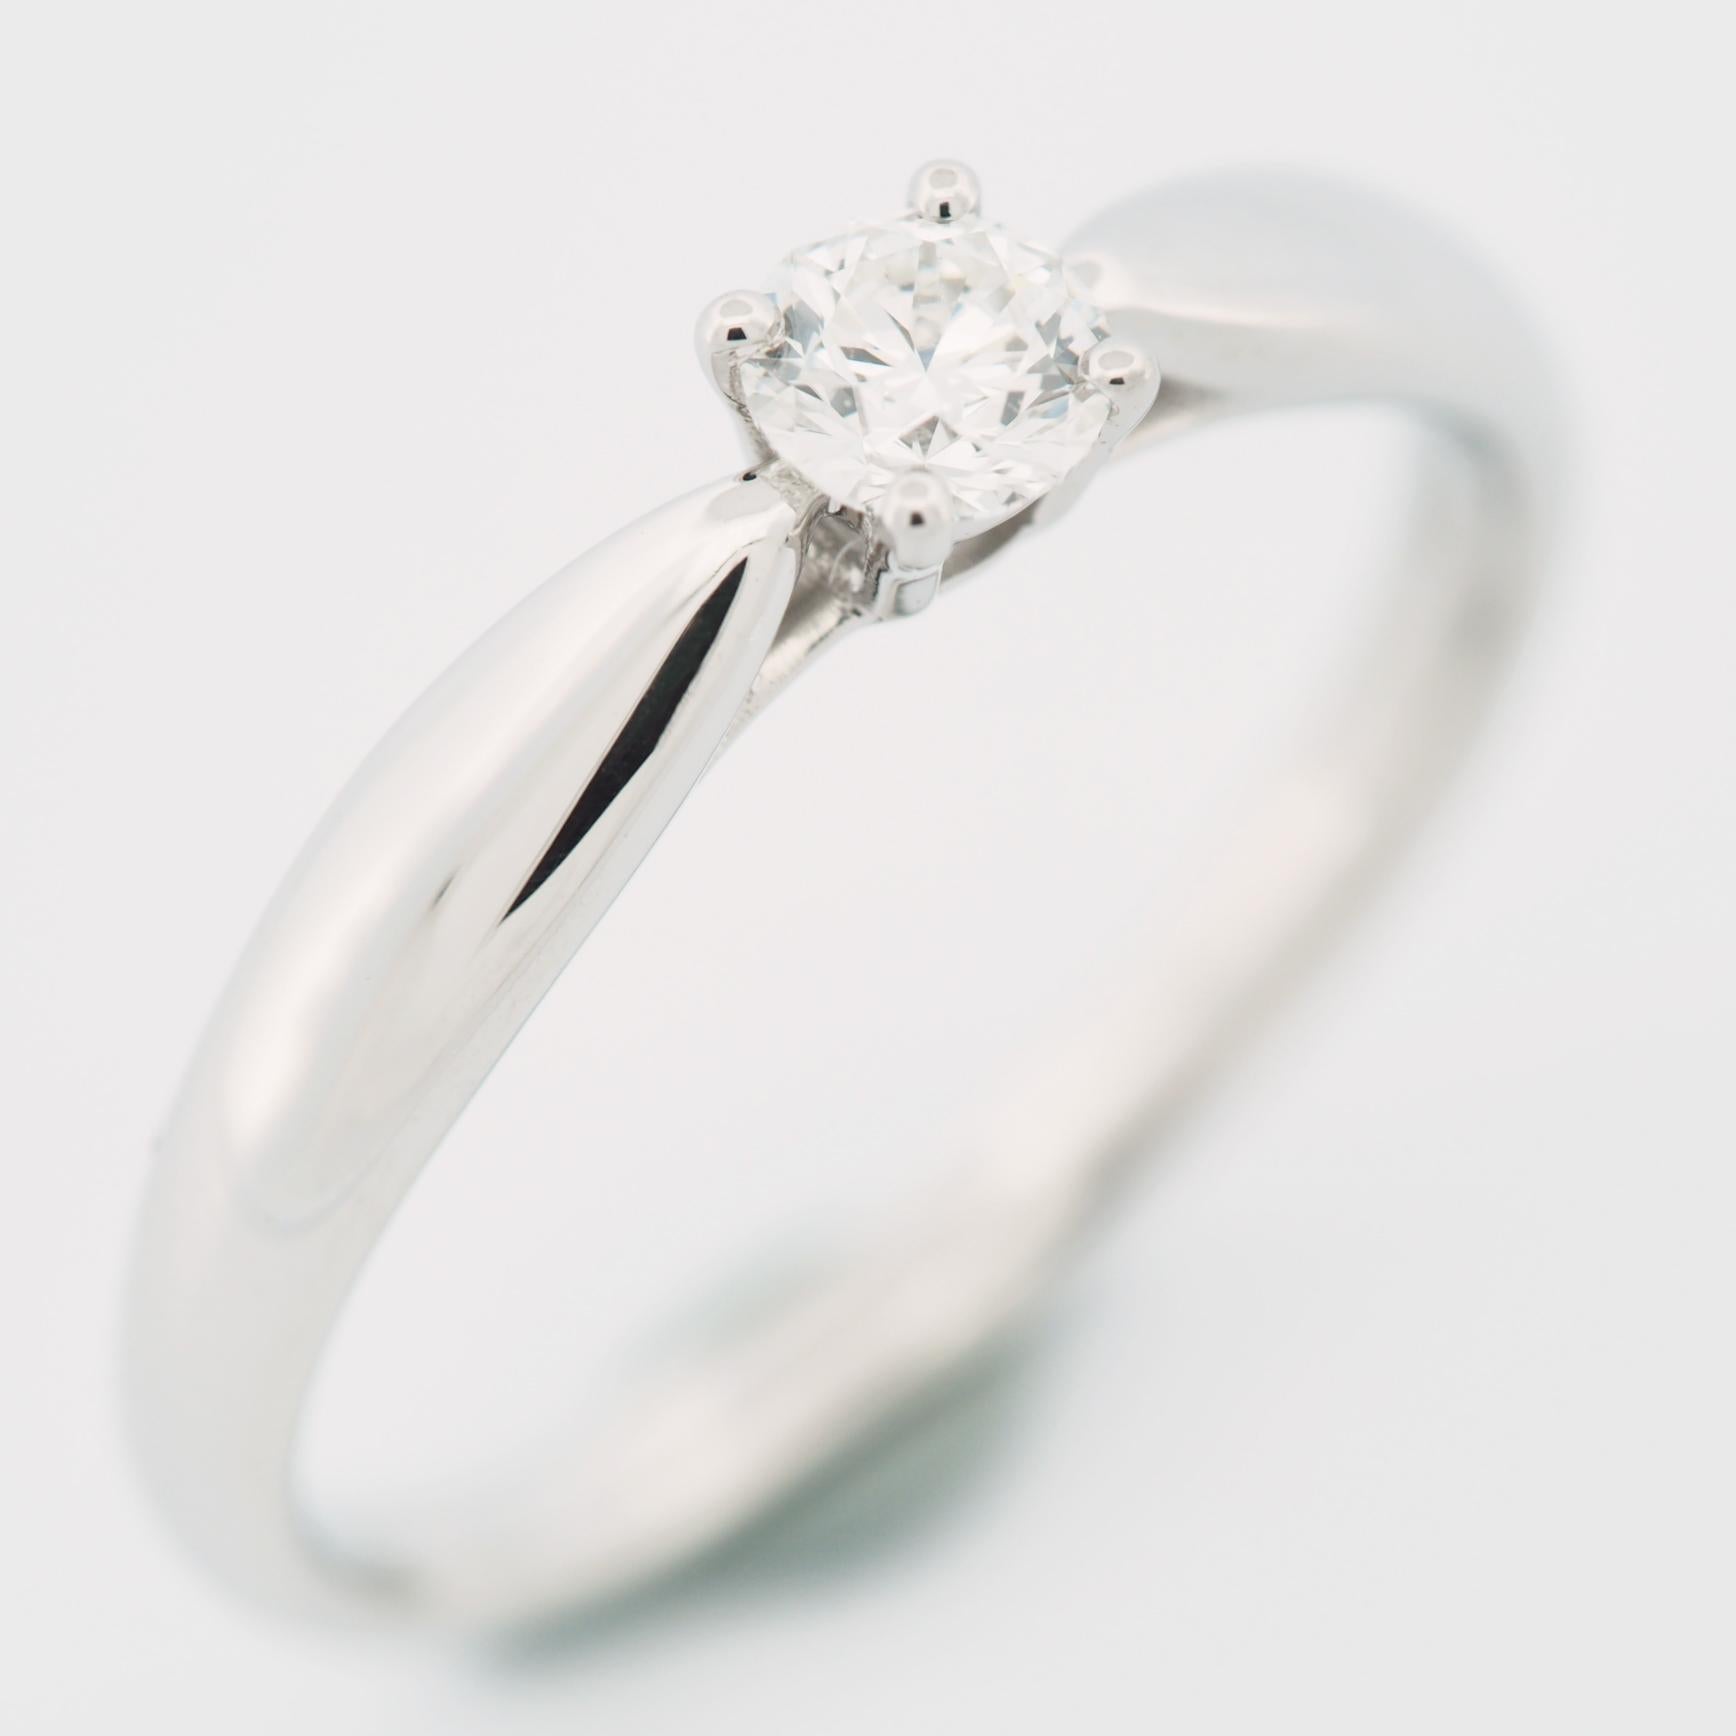 Item: Tiffany Harmony Solitaire Diamond Ring 
Stones: Diamond / 0.21ct
Color: G
Clarity:VS1
Polish: Excellent
Symmetry: Excellent
Fluorescence: None
Metal: Platinum 950
Ring Size: US SIZE 5.75 UK SIZE K 3/4
Internal Diameter: 16.40 mm
Measurements: